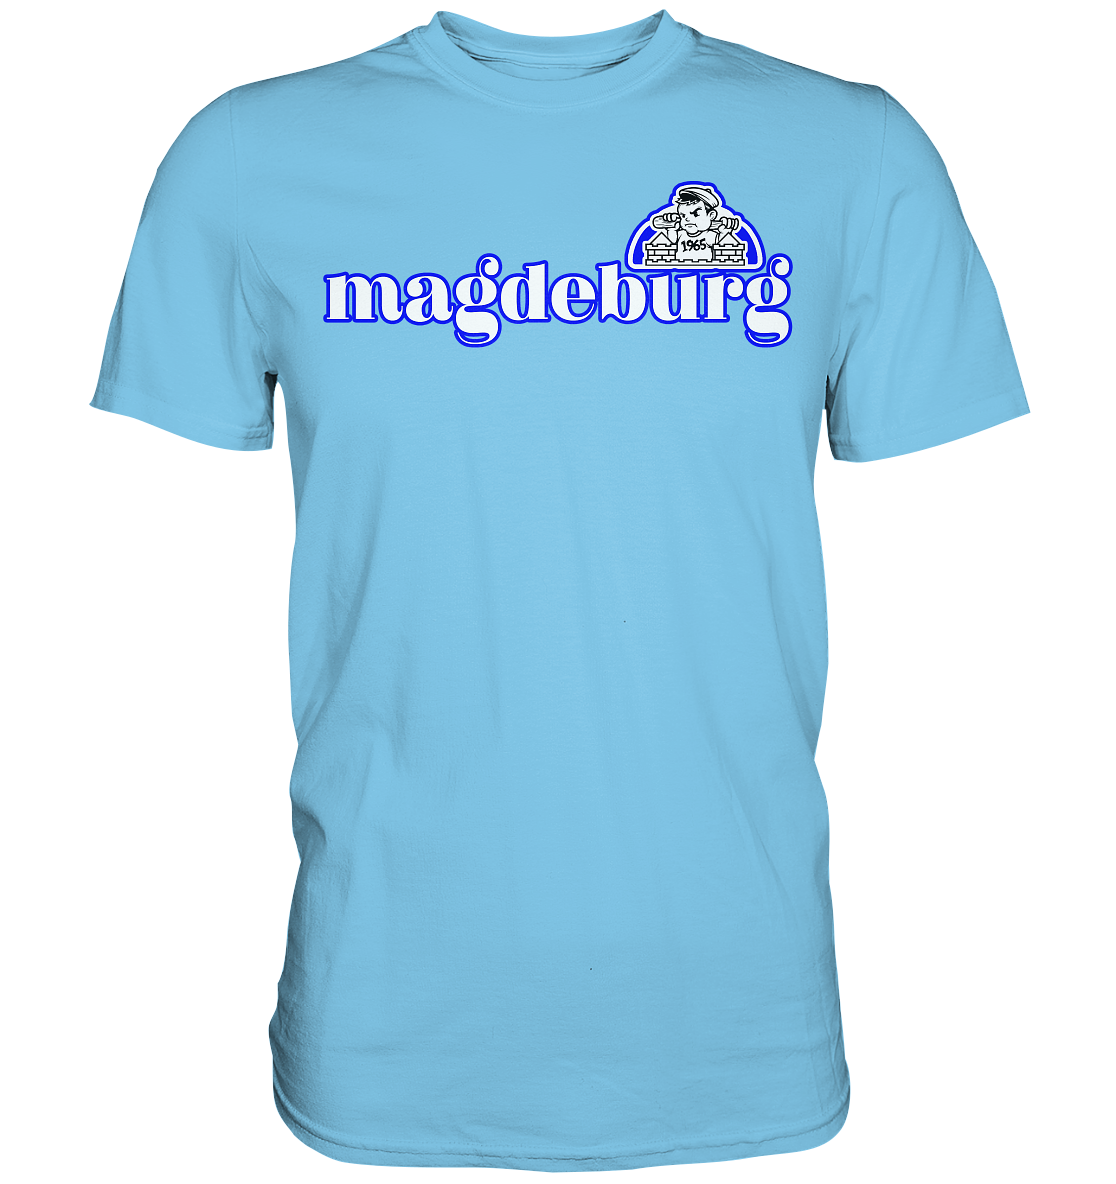 Magdeburger - Premium Shirt